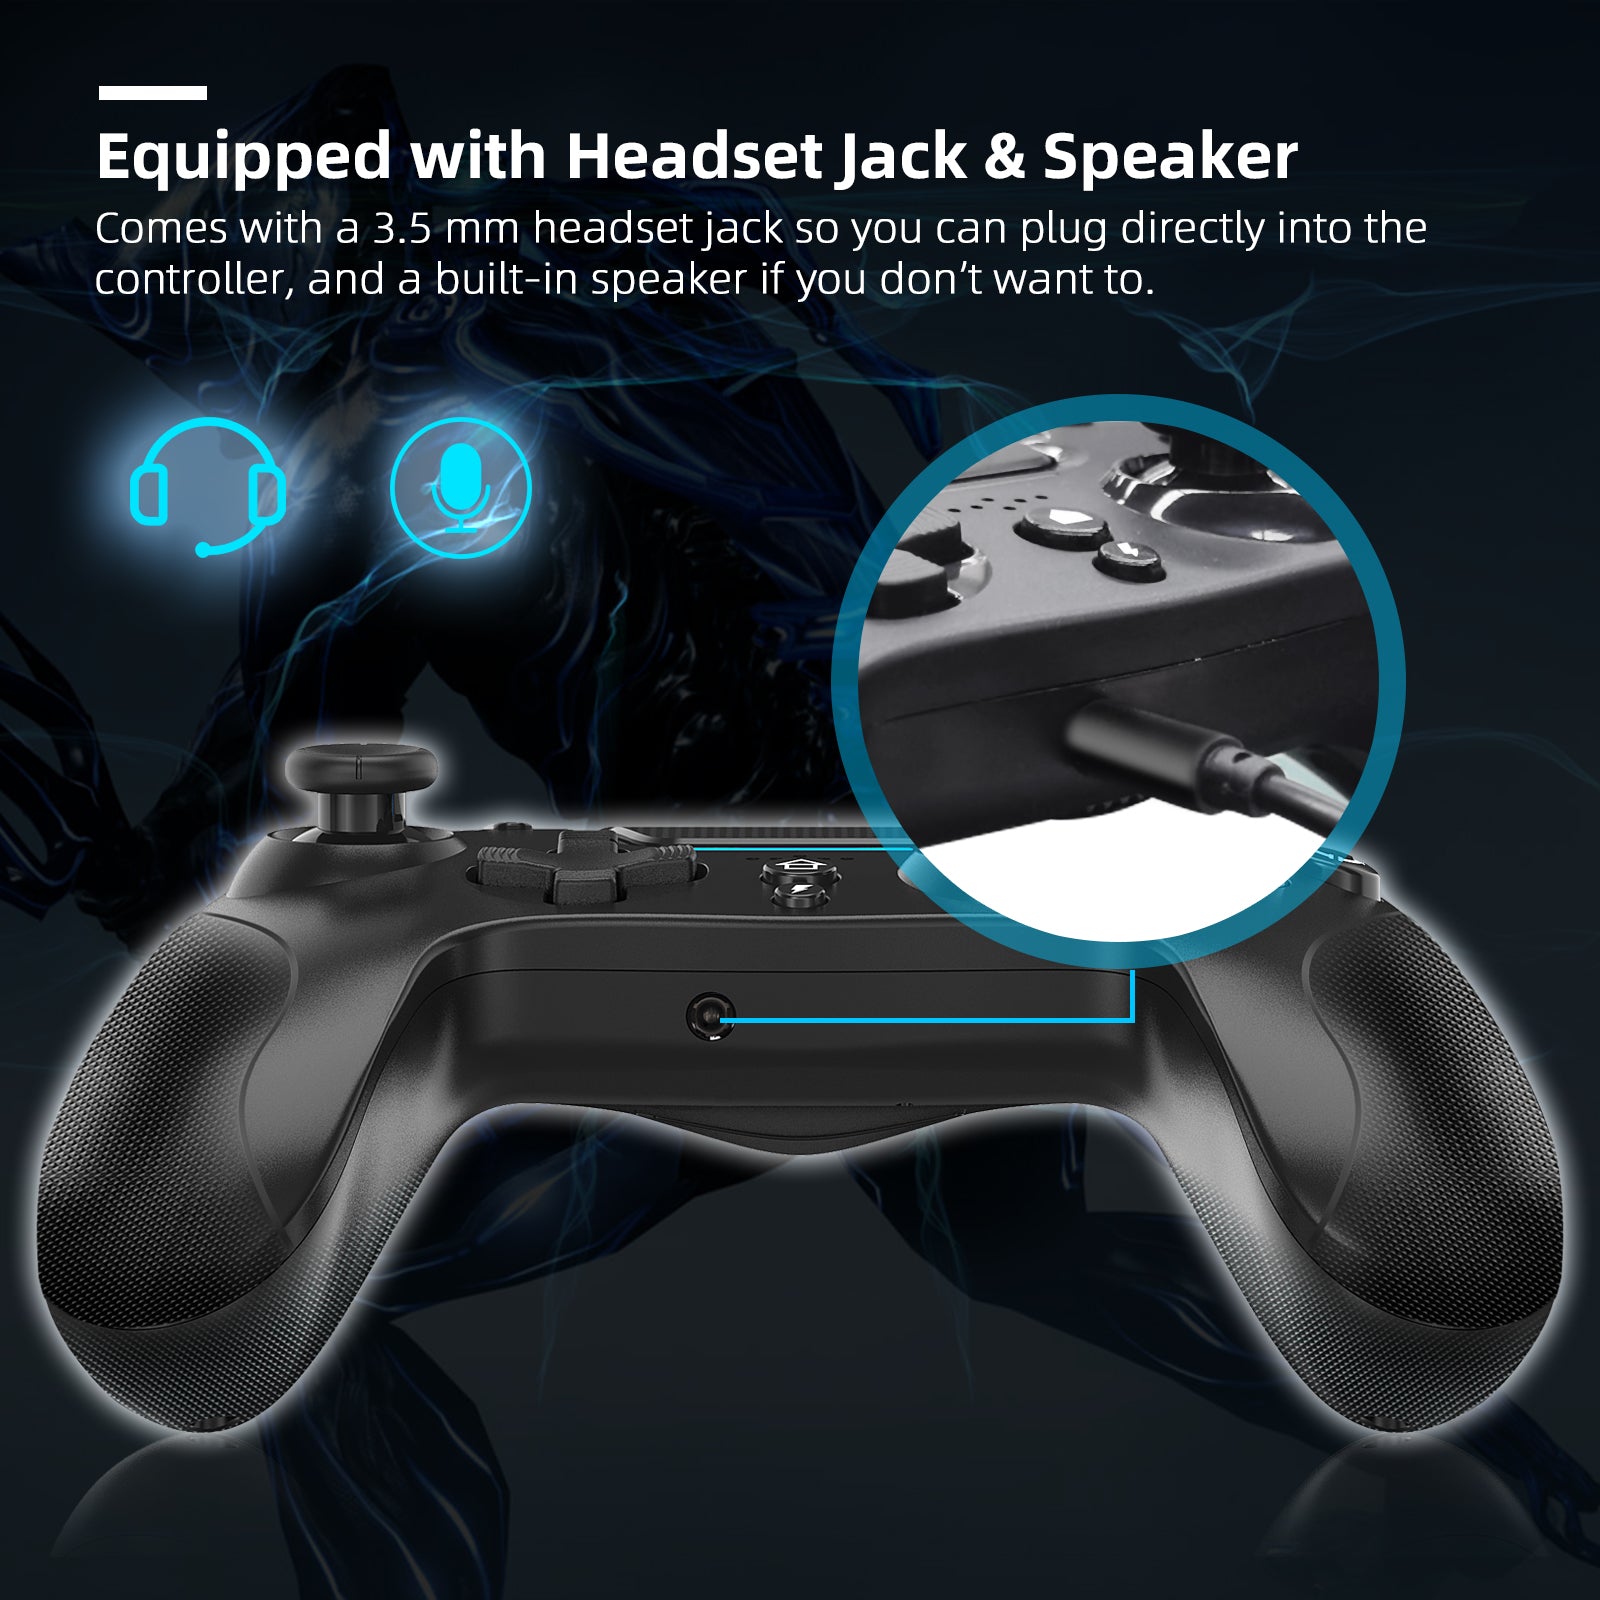 Controller has a Headset Jack & Speaker.